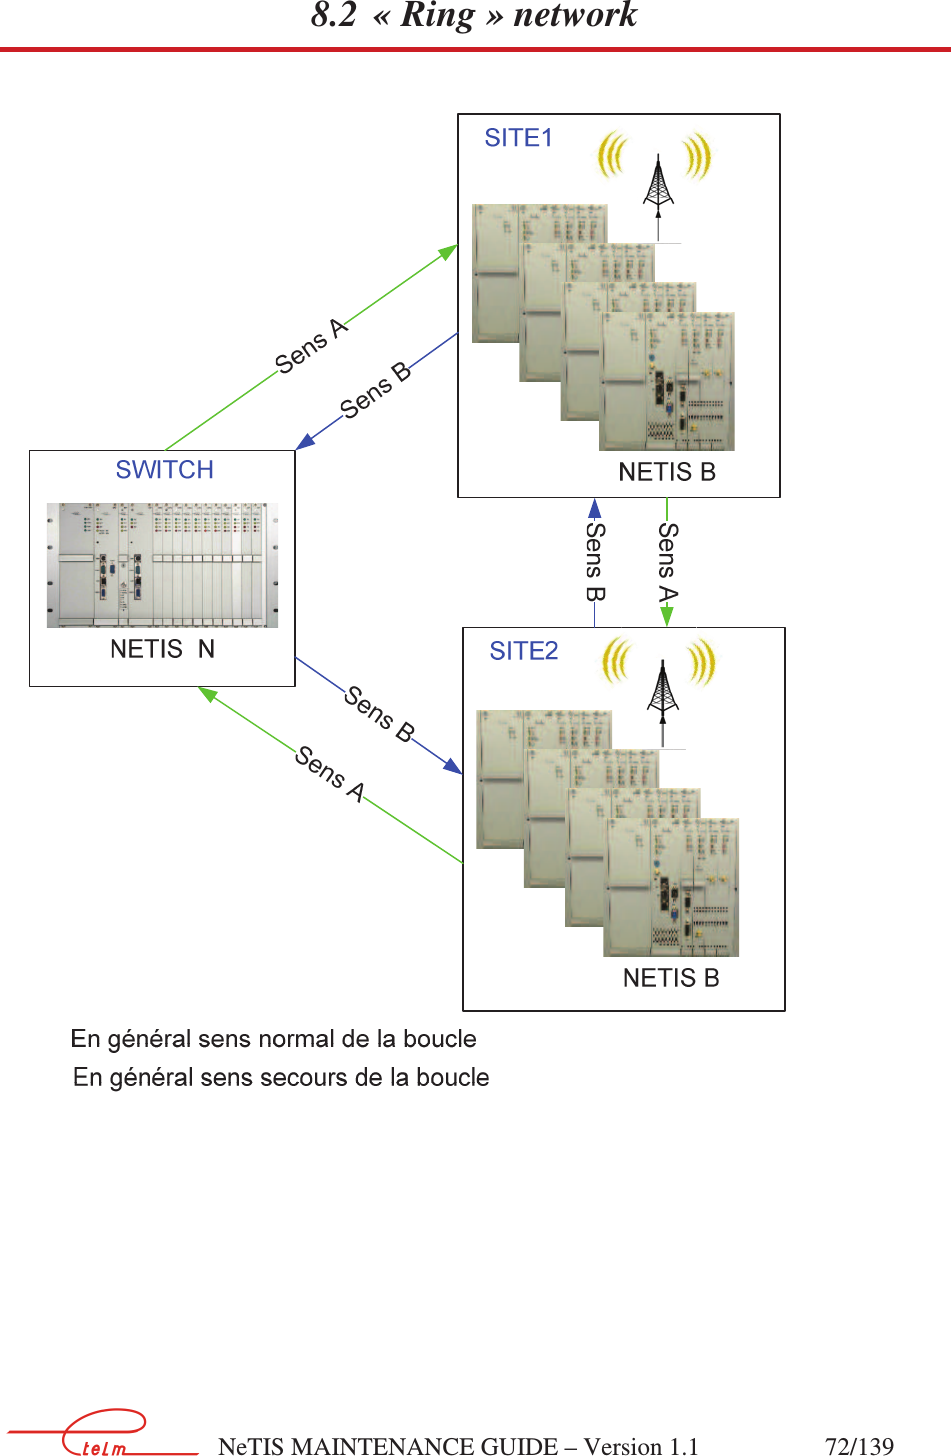        NeTIS MAINTENANCE GUIDE – Version 1.1                    72/139   8.2 « Ring » network        